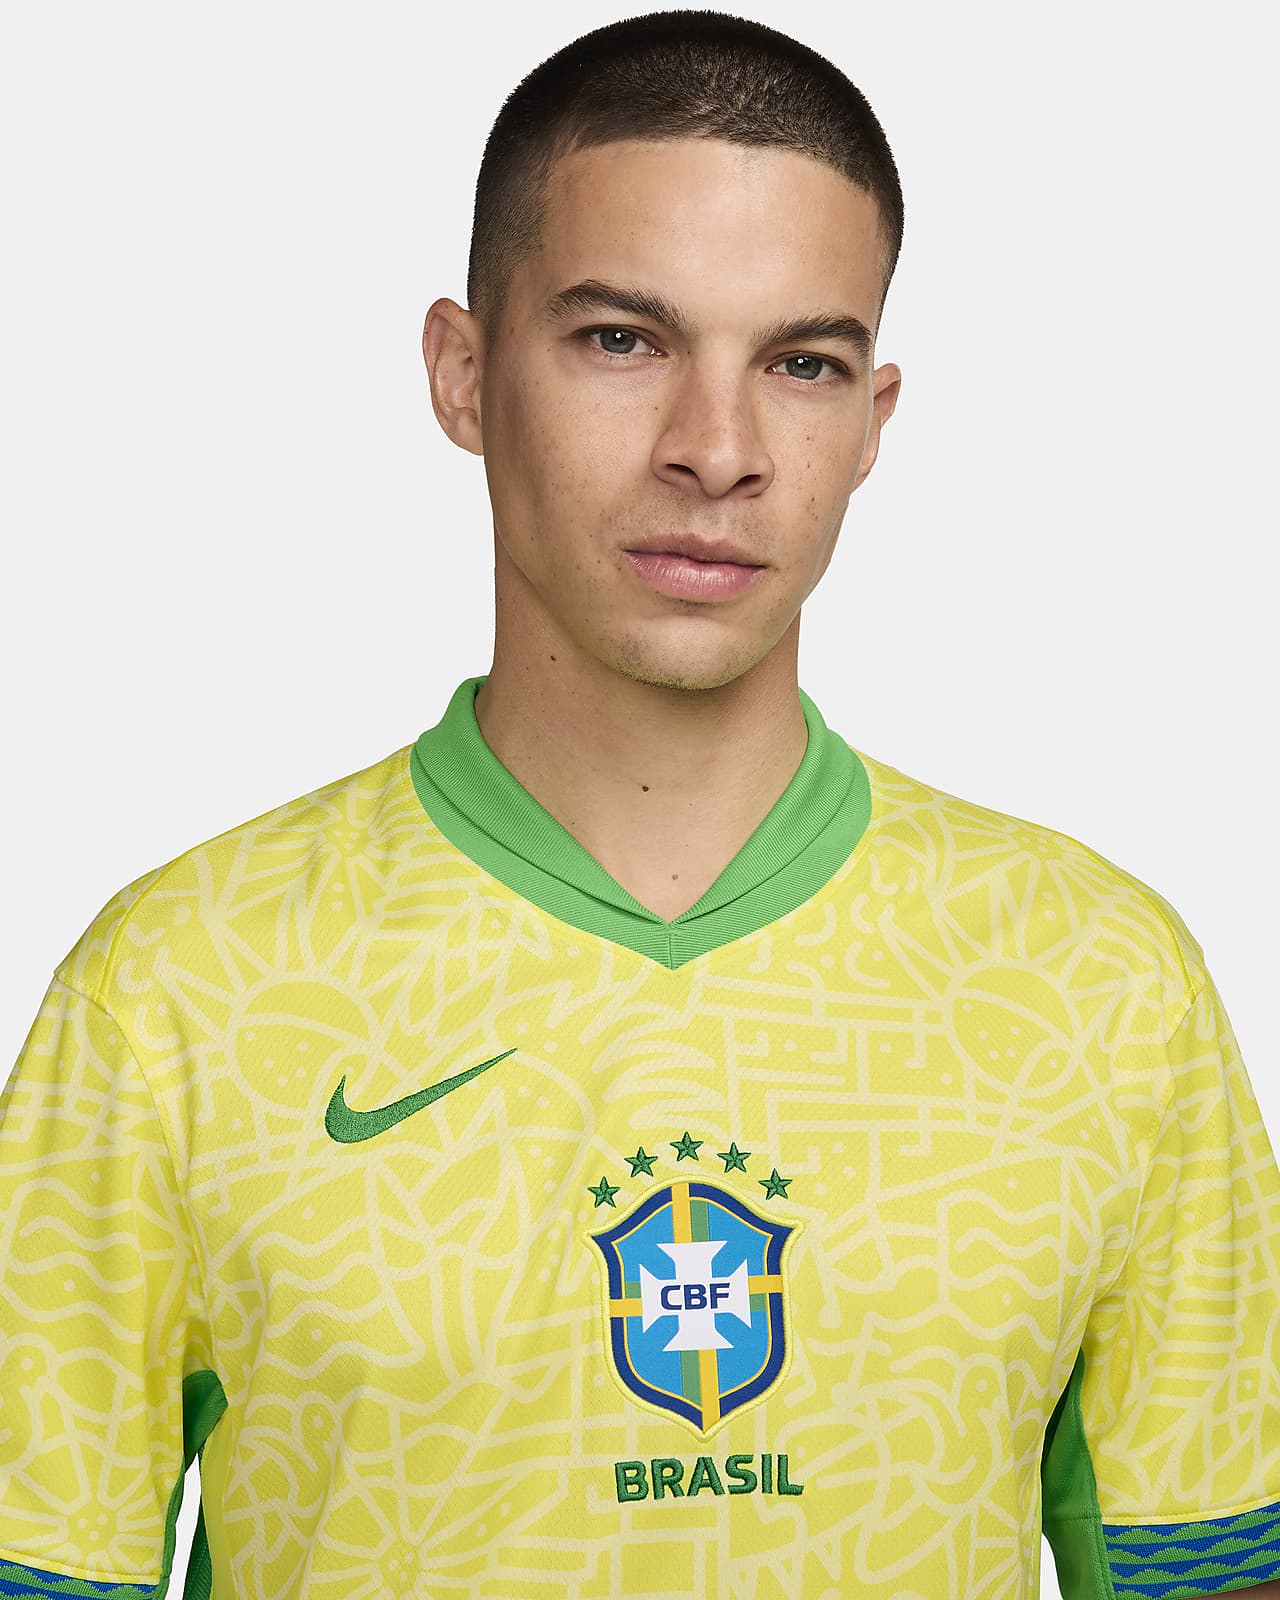 Brazil Brasileira CBF Futebol Nike Tee T-Shirt Size XL Yellow